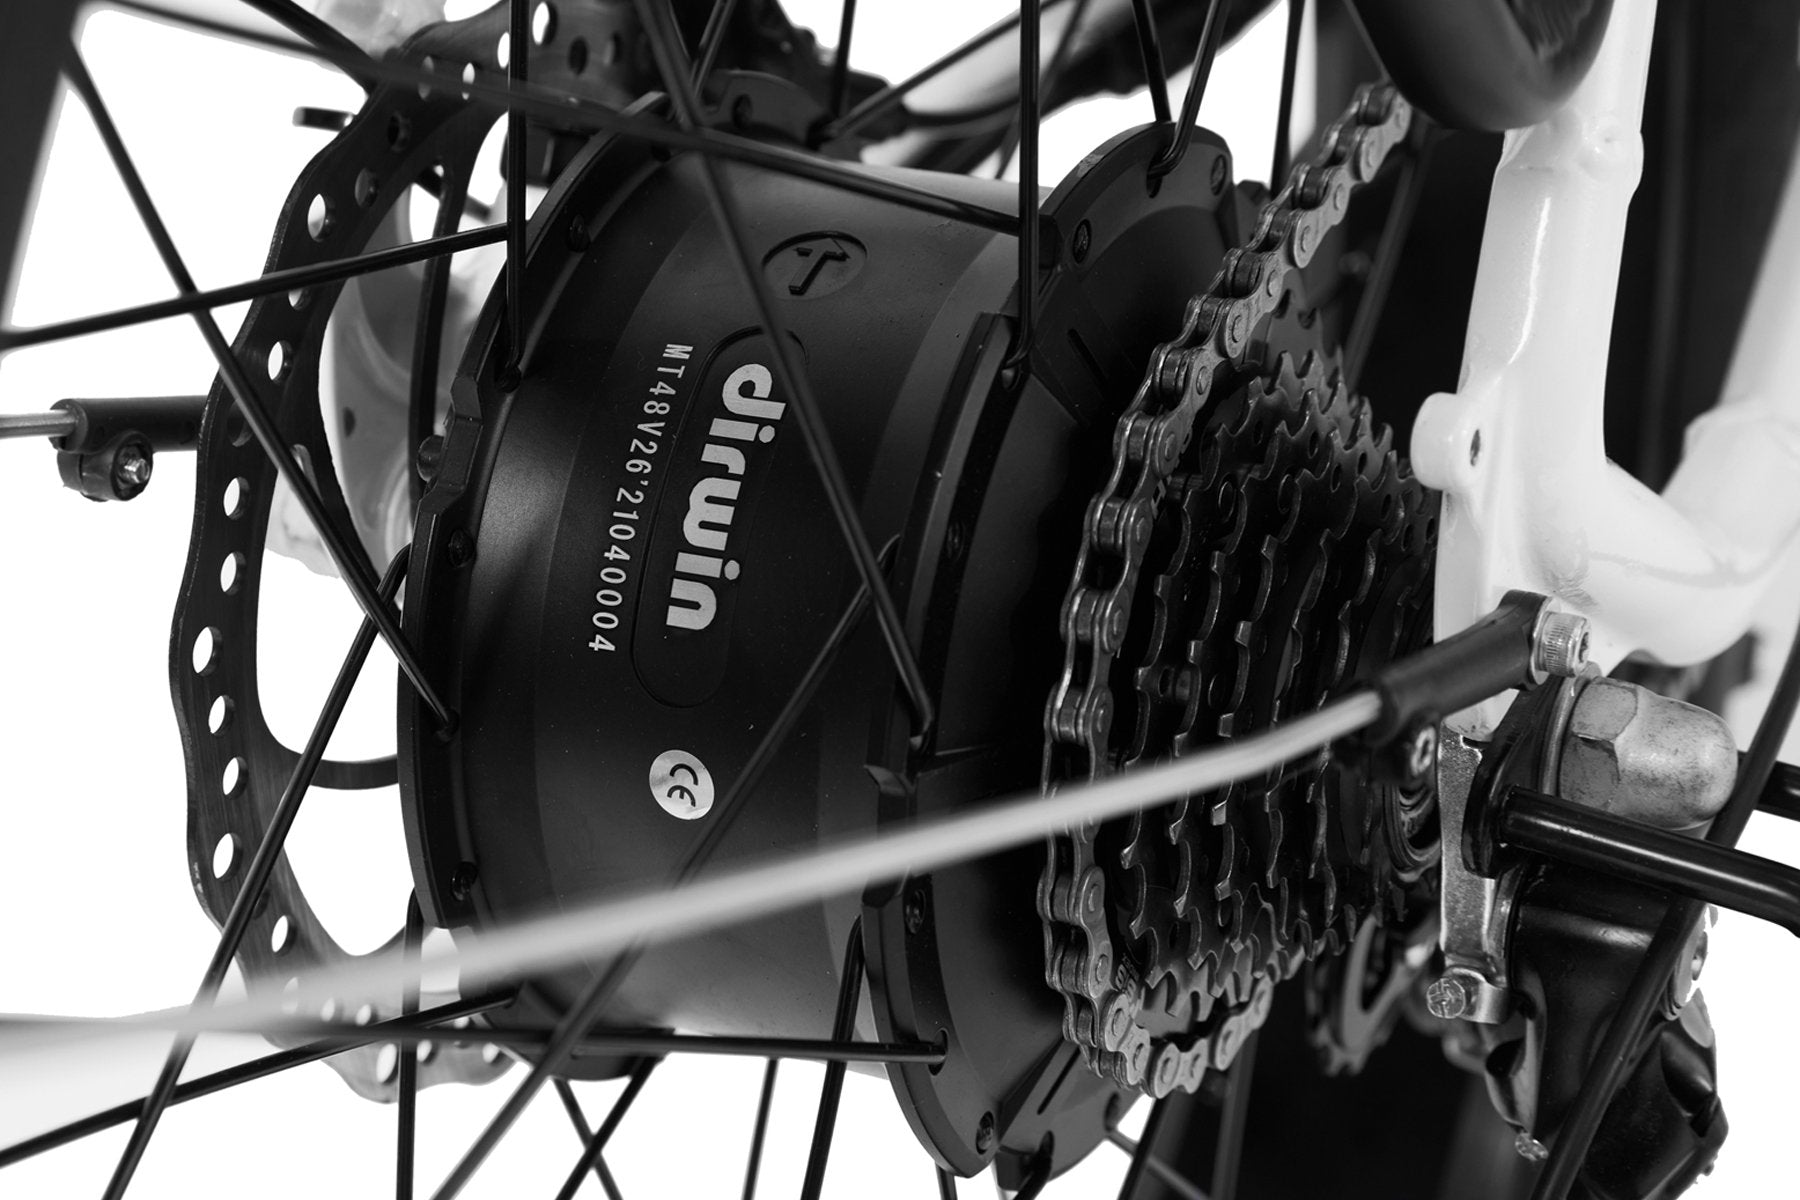 Dirwin Pioneer Fat Tire Electric Bike - Cycleson